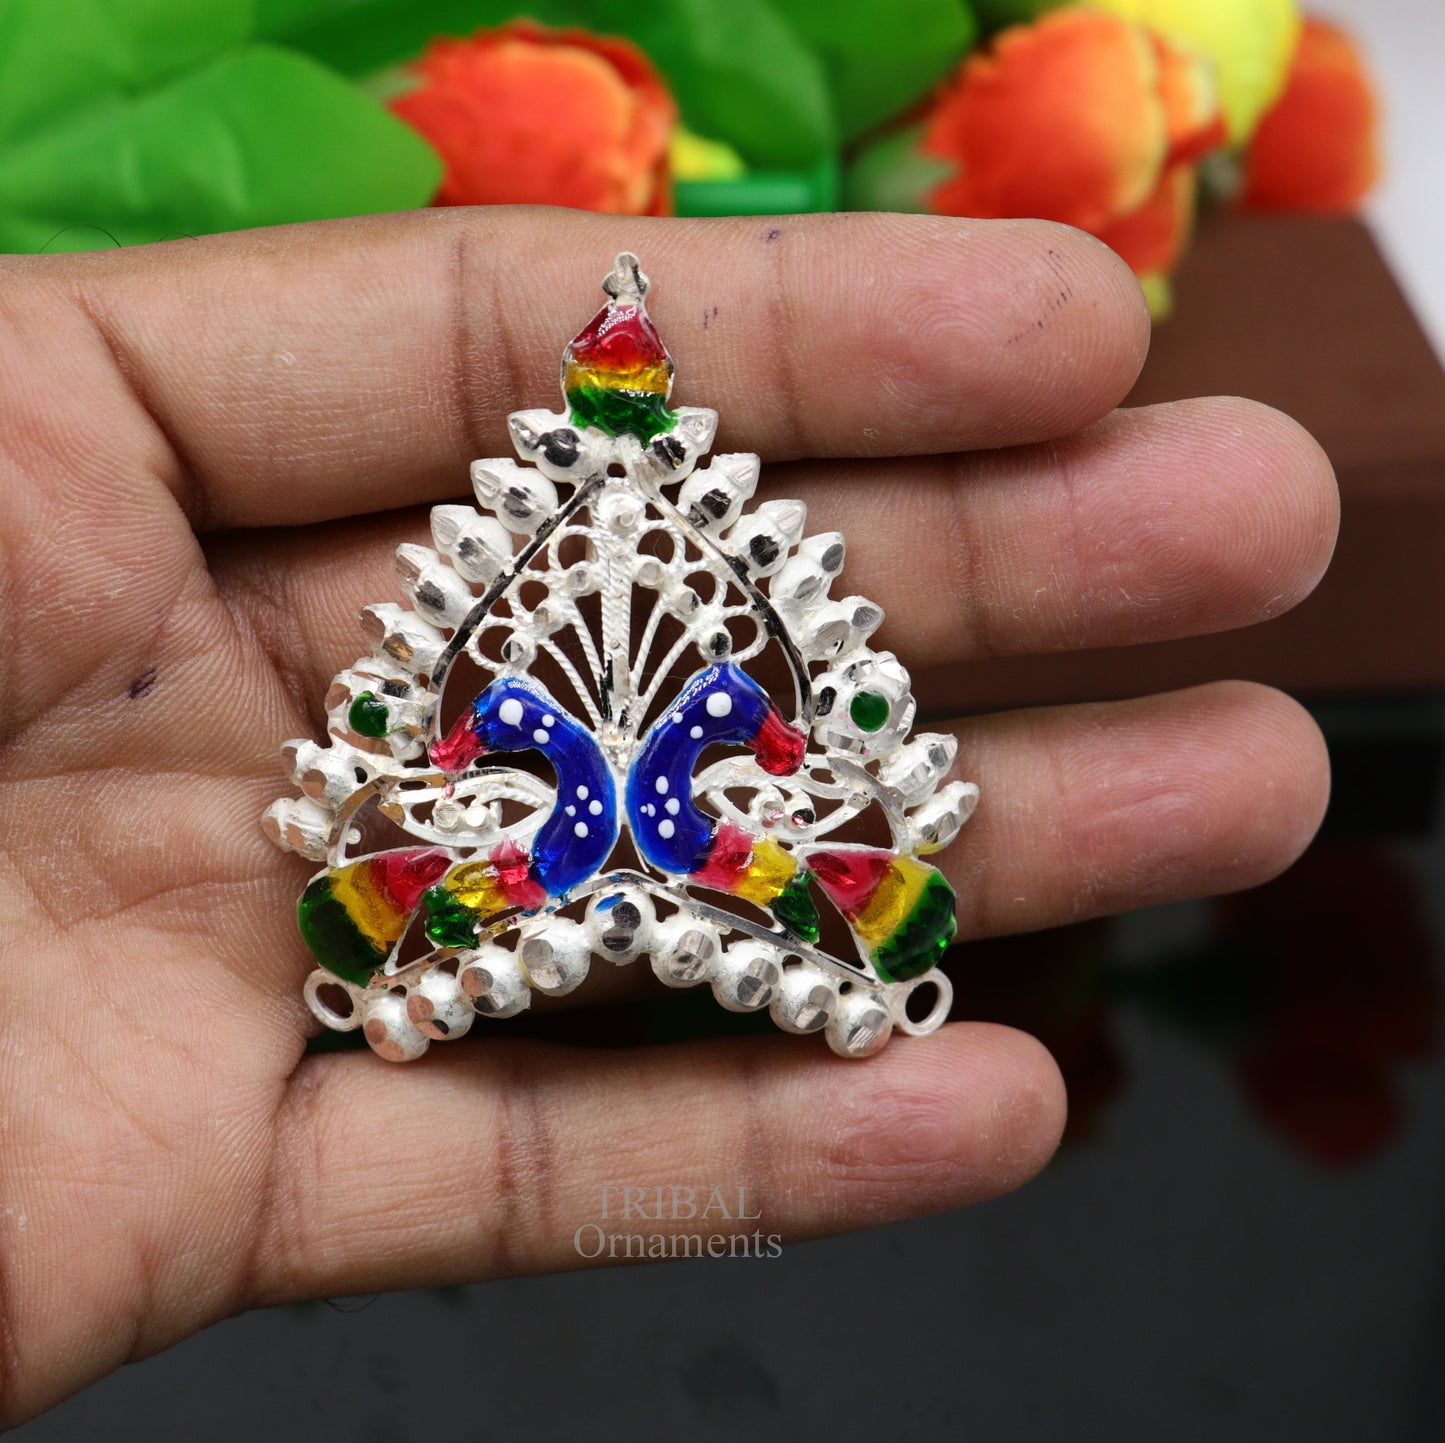 Baby krishna crown or mukut fabulous enamel peacock design 925 silver handmade idol krishna mukut gifting crawling krishna jewelry su721 - TRIBAL ORNAMENTS